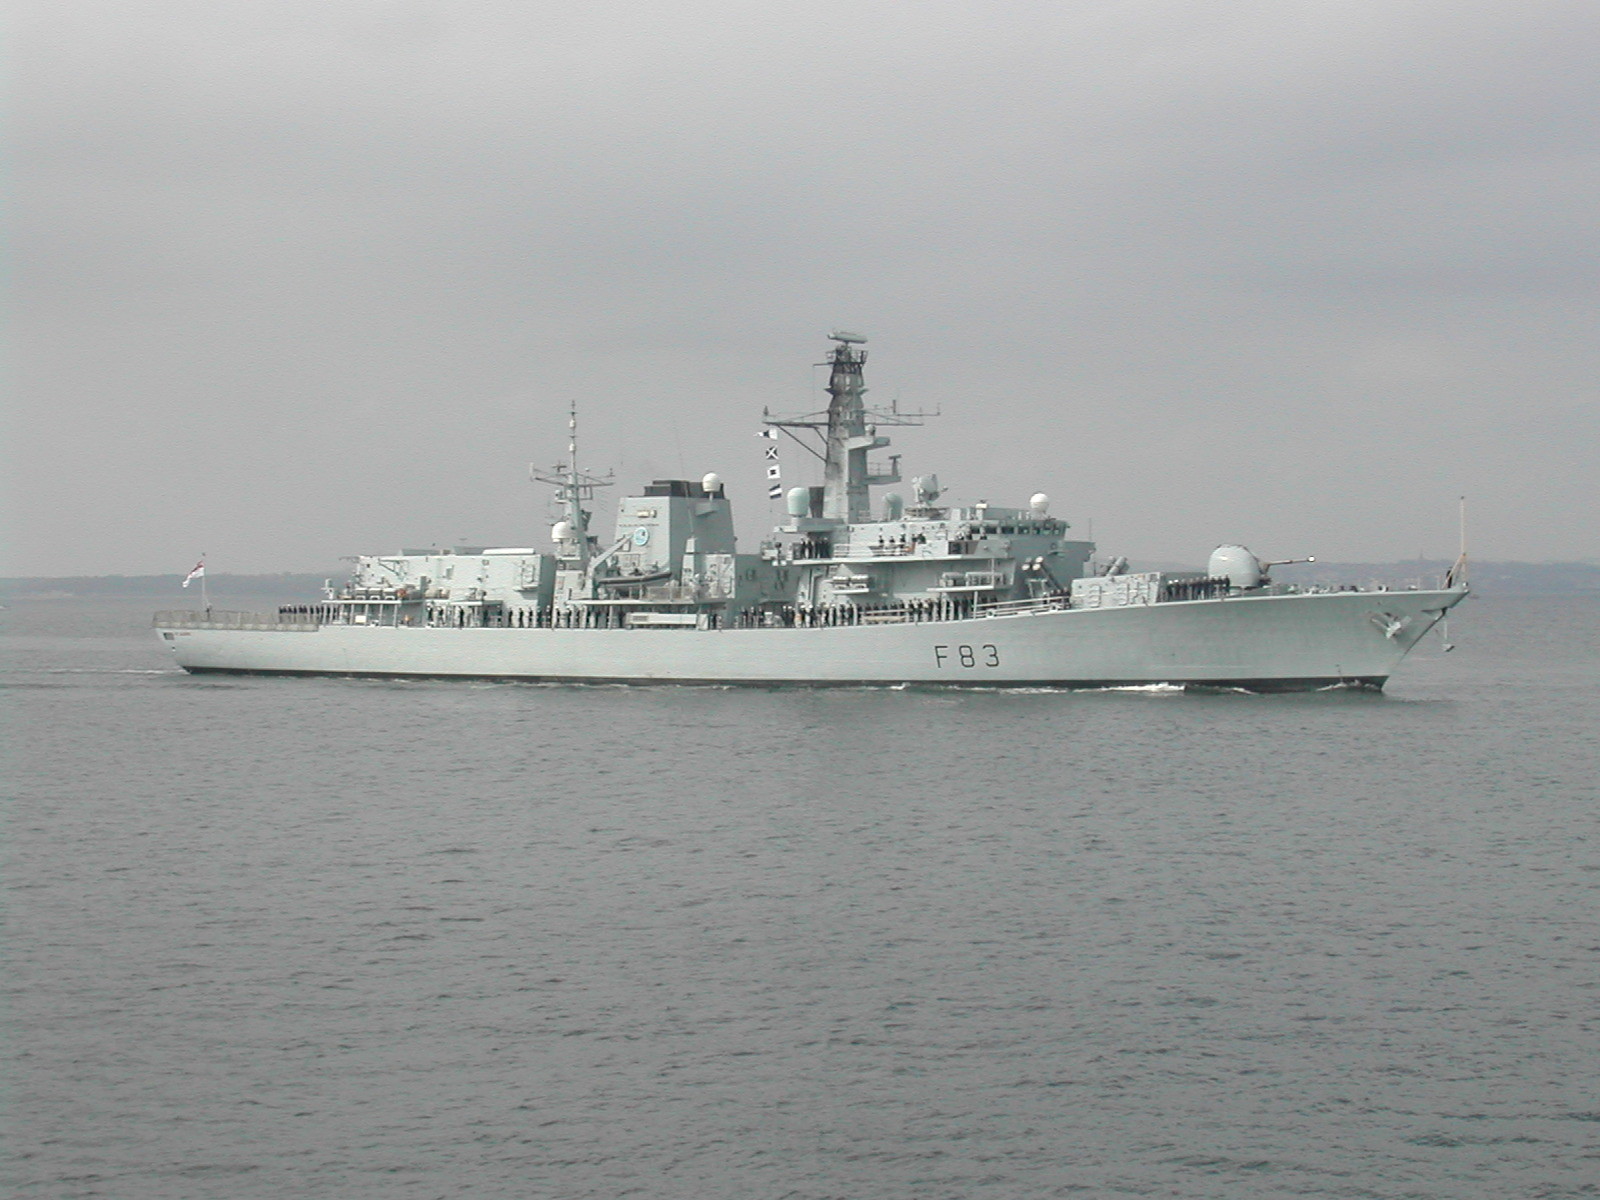 HMS St Albans F83